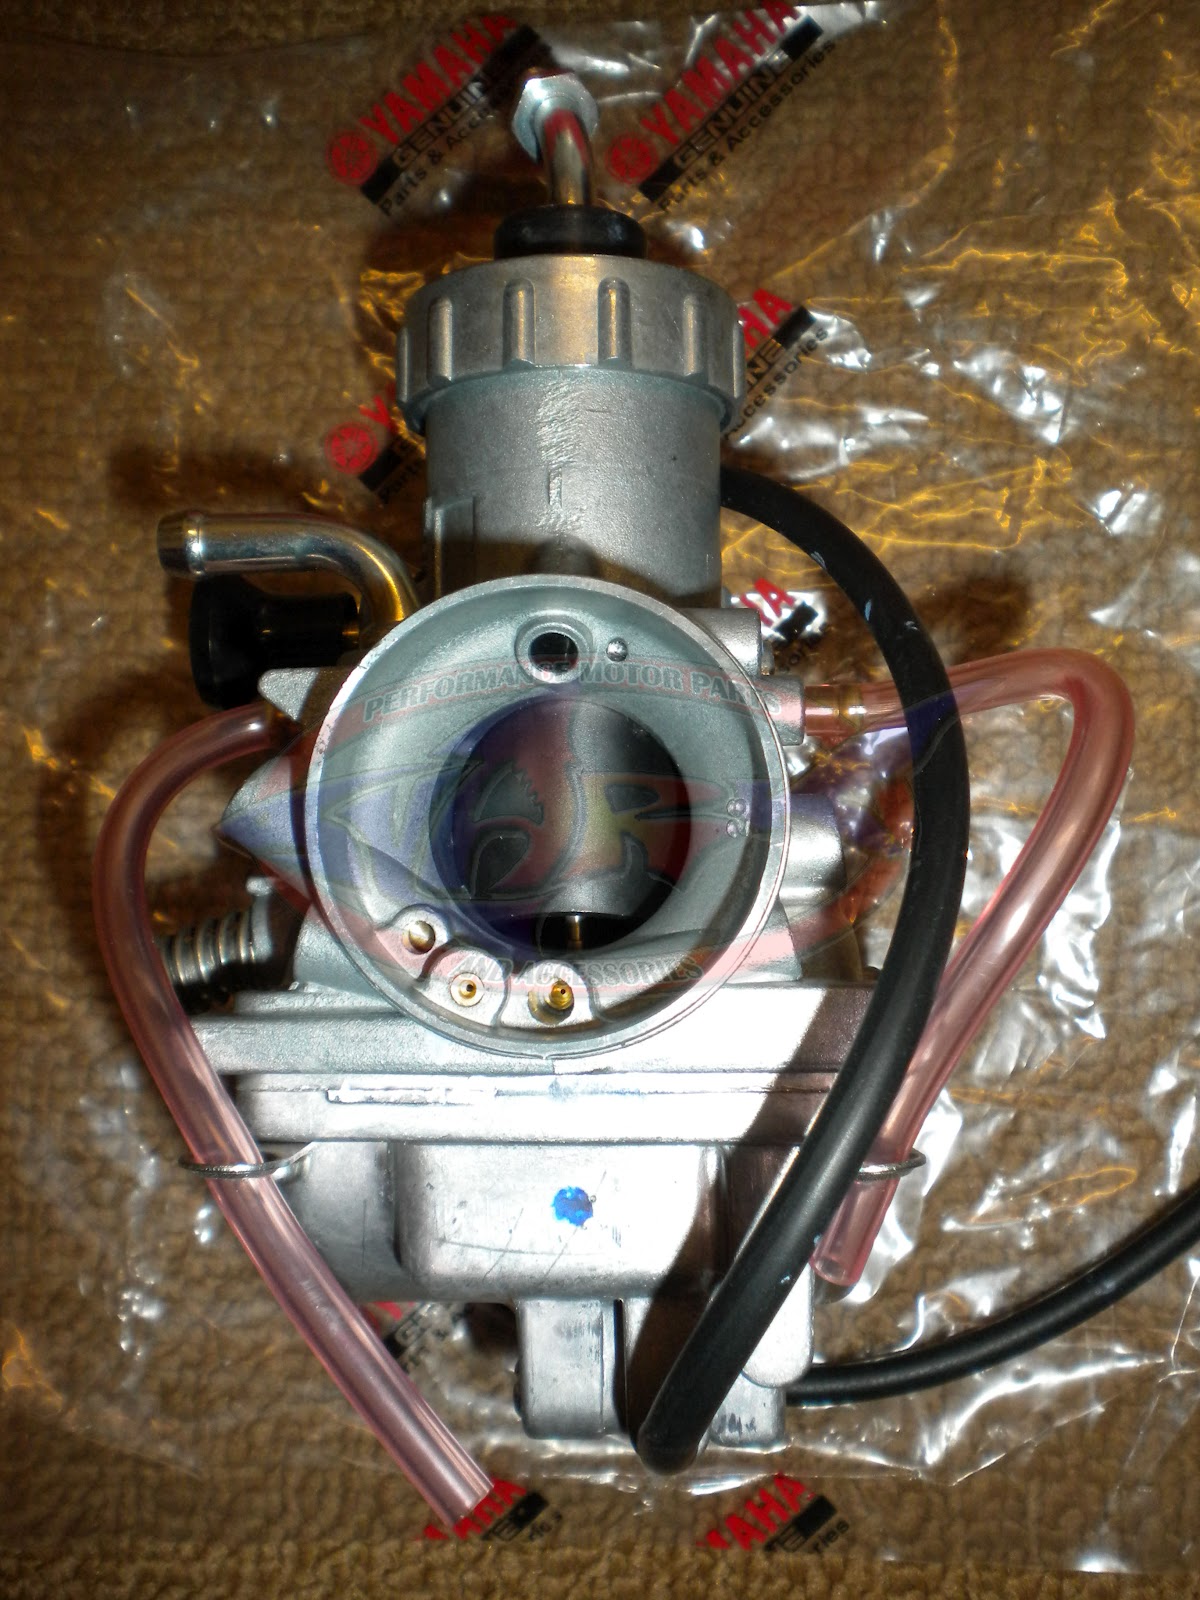 Kumpulan Foto Modifikasi Motor Rxz Terlengkap Modispik Motor